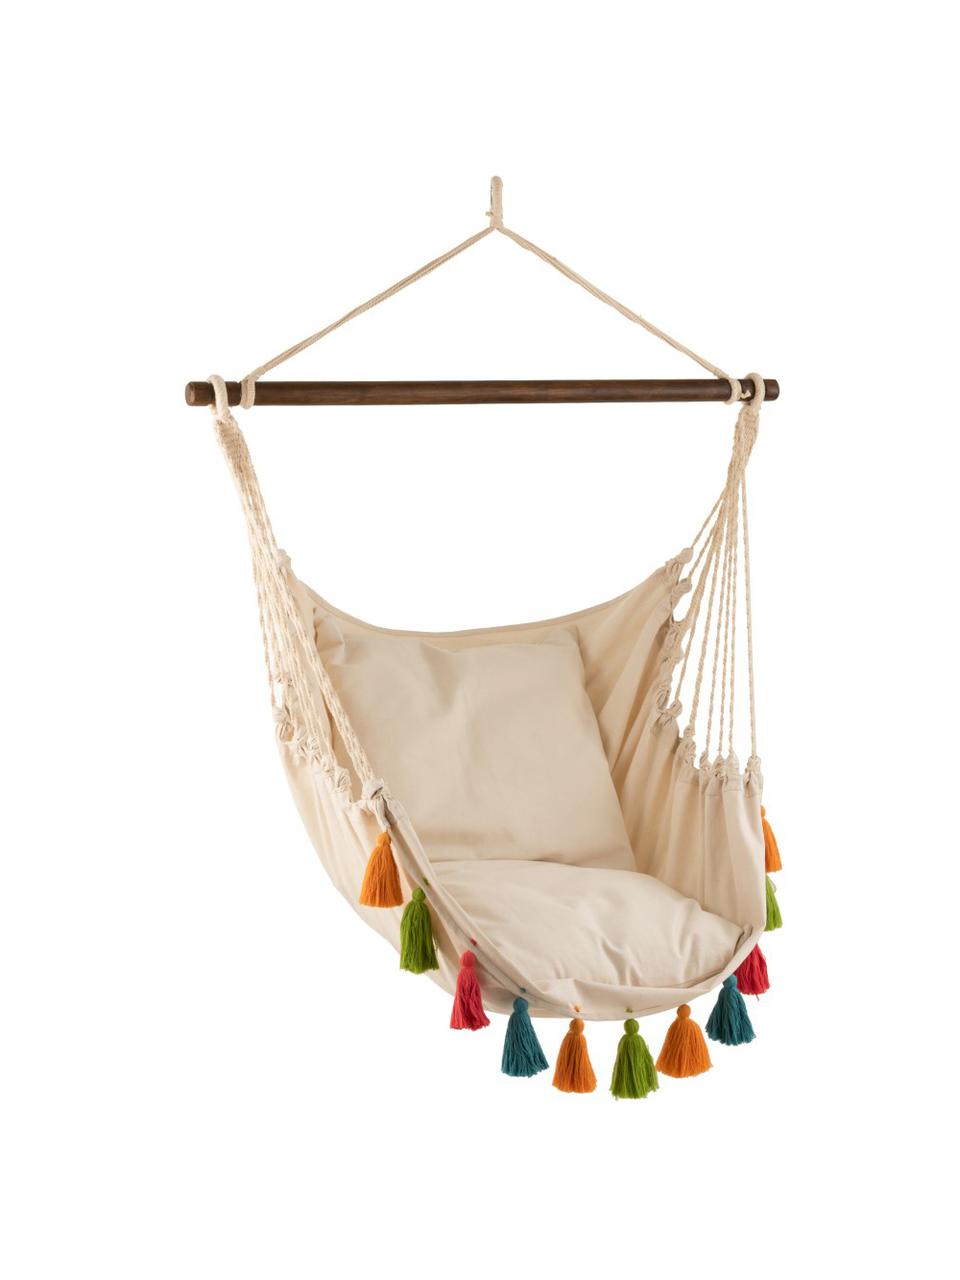 Hangstoel Quast met gekleurde franjes, Stang: hout, Crèmekleurig, multicolour, 128 x 160 cm